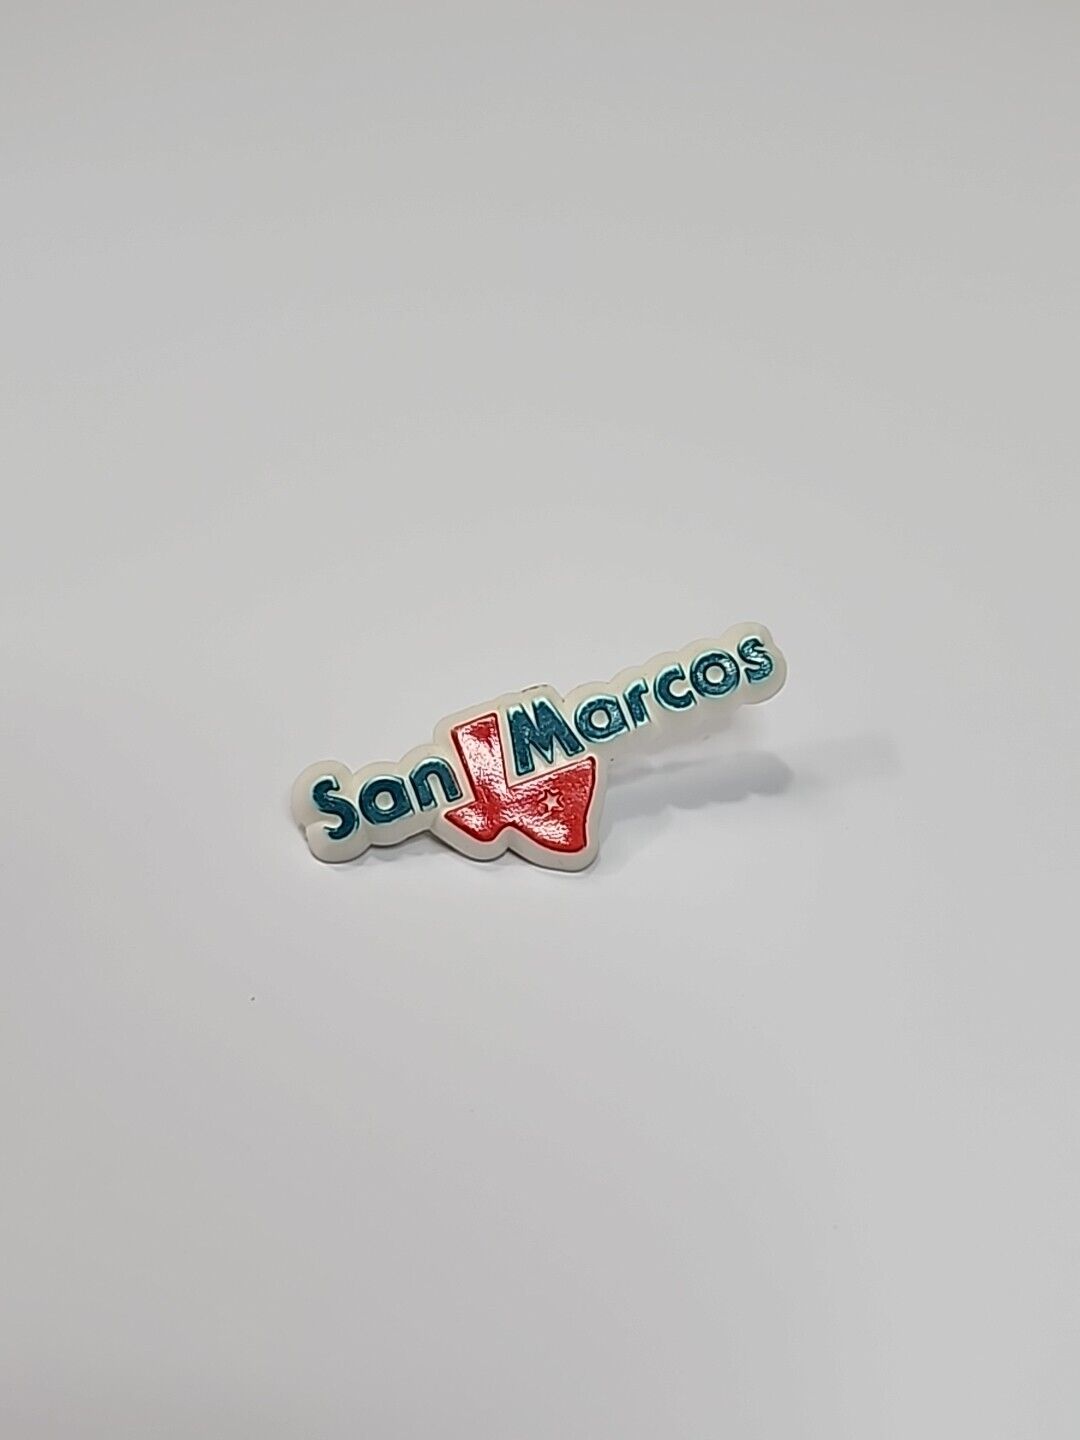 PLASTIC San Marcos Texas Travel Souvenir Lapel Pin Hard 